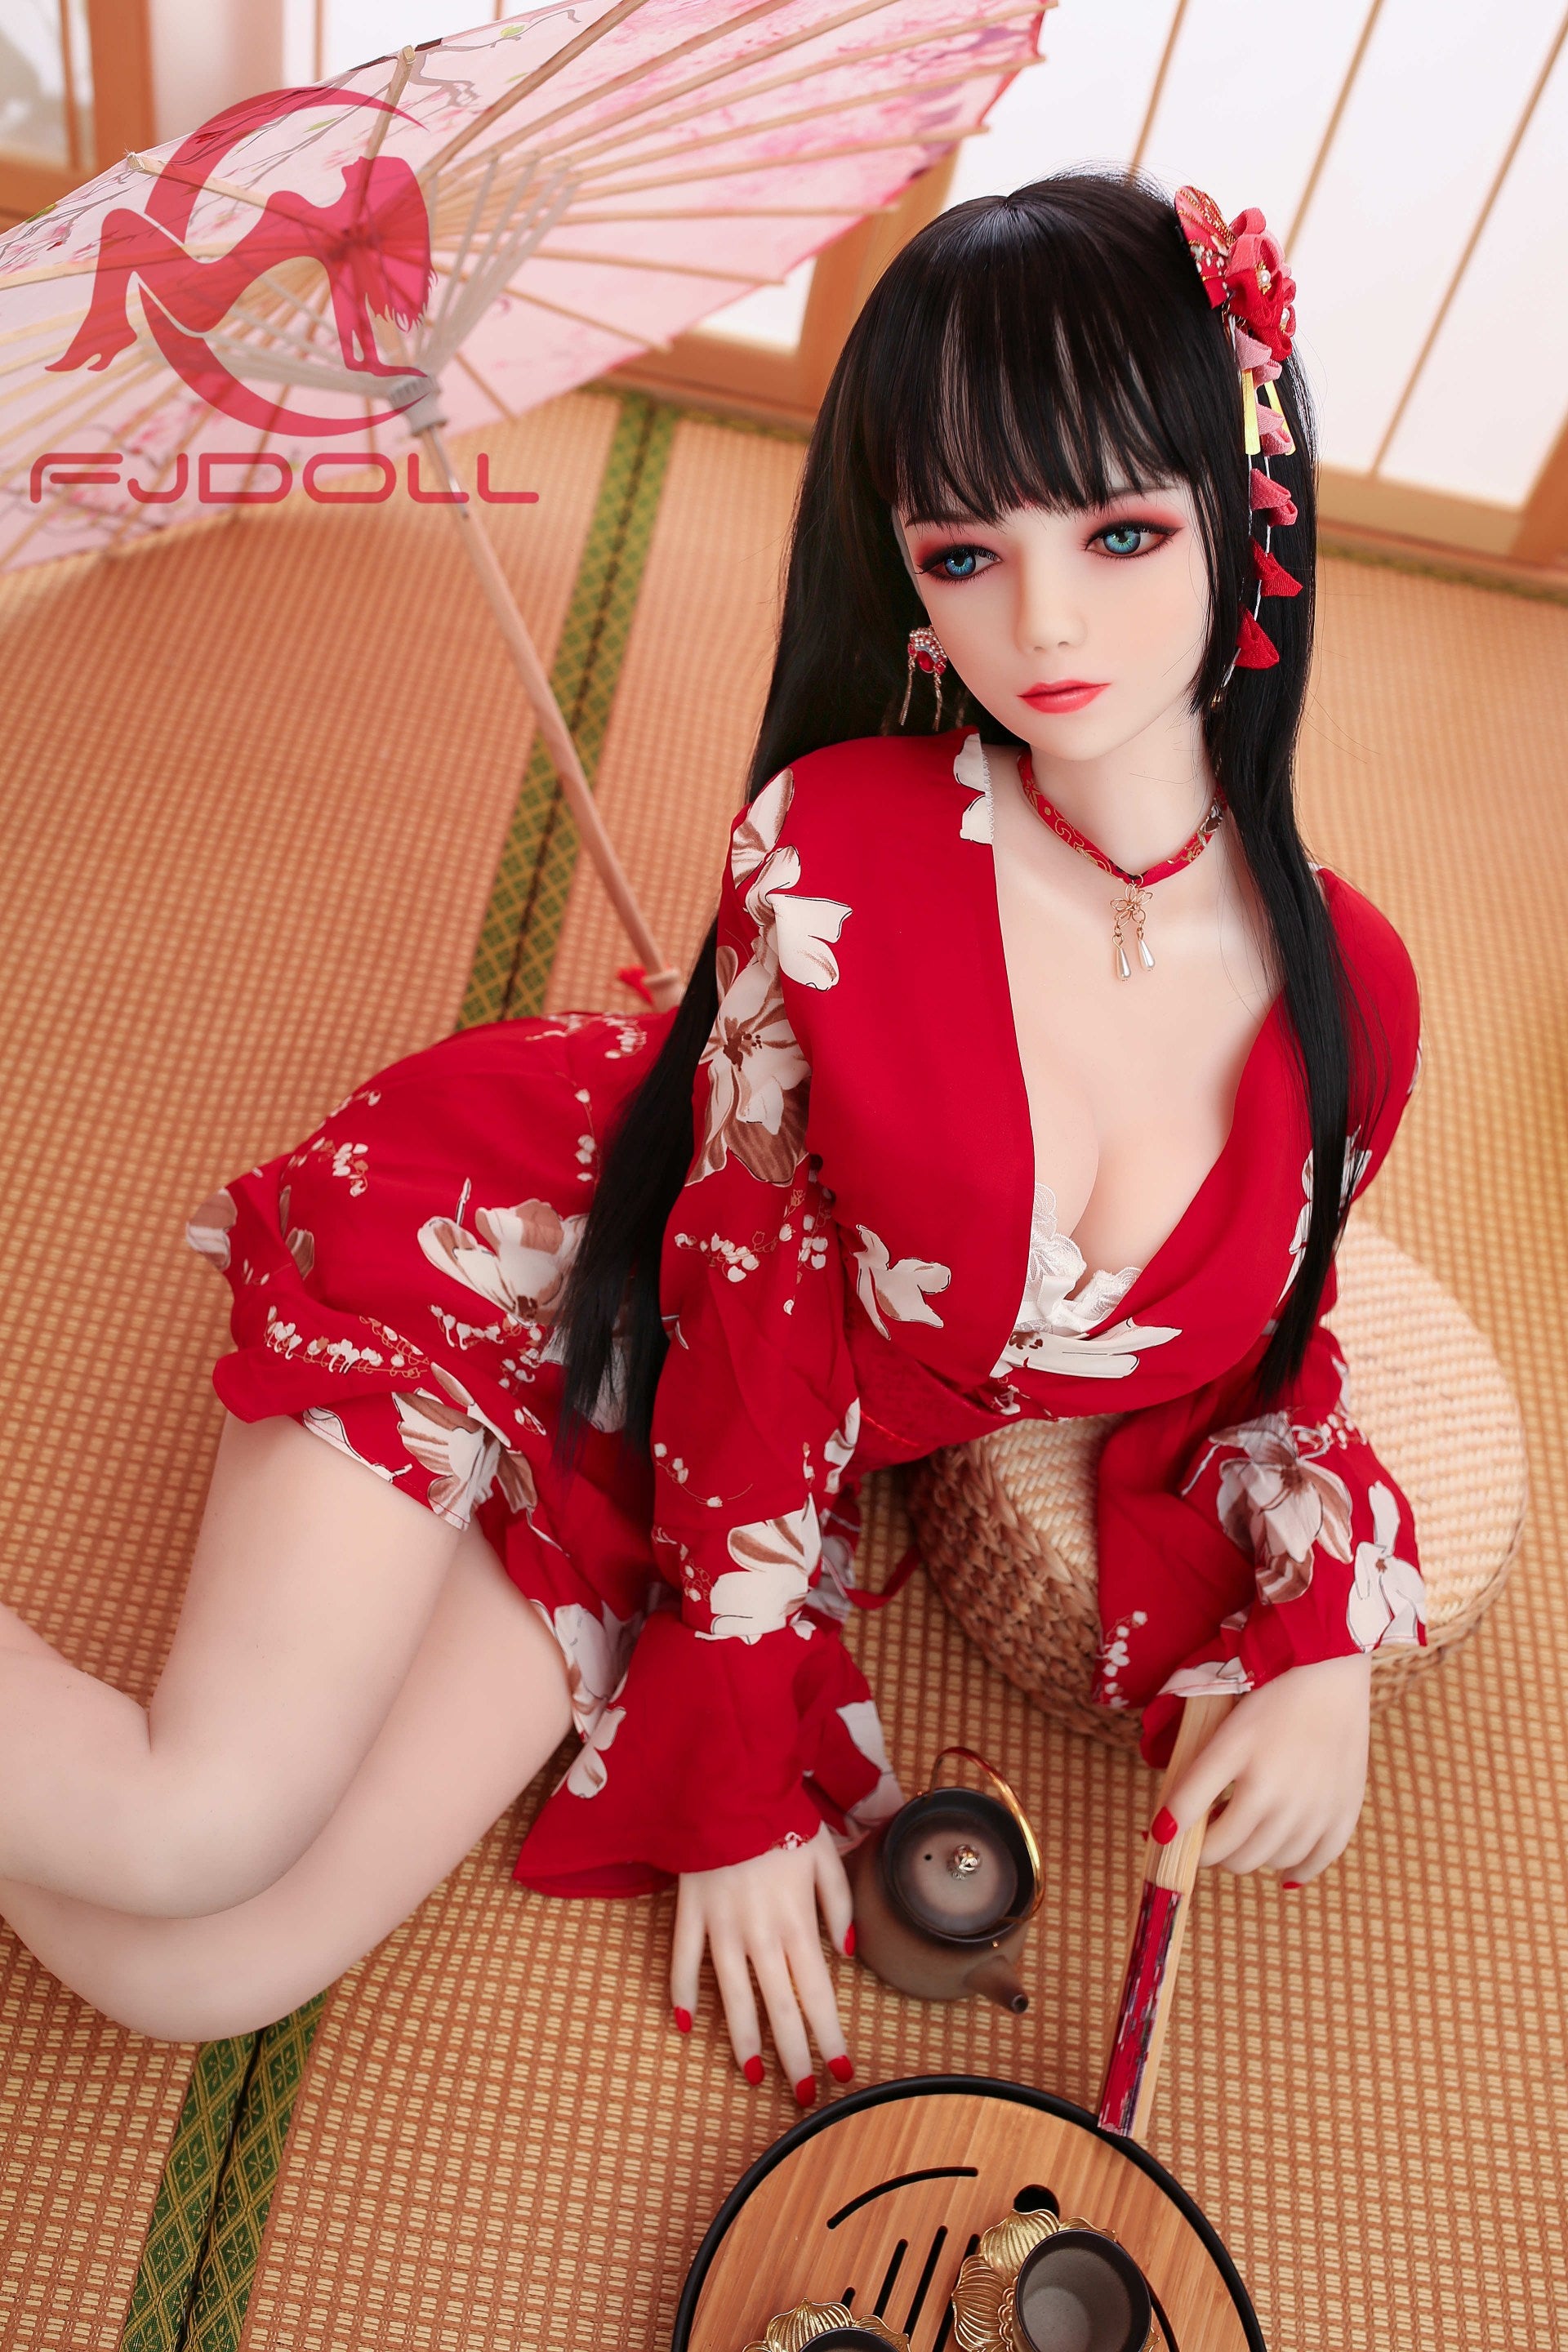 Sakurako: FJ Doll Asian Sex Doll